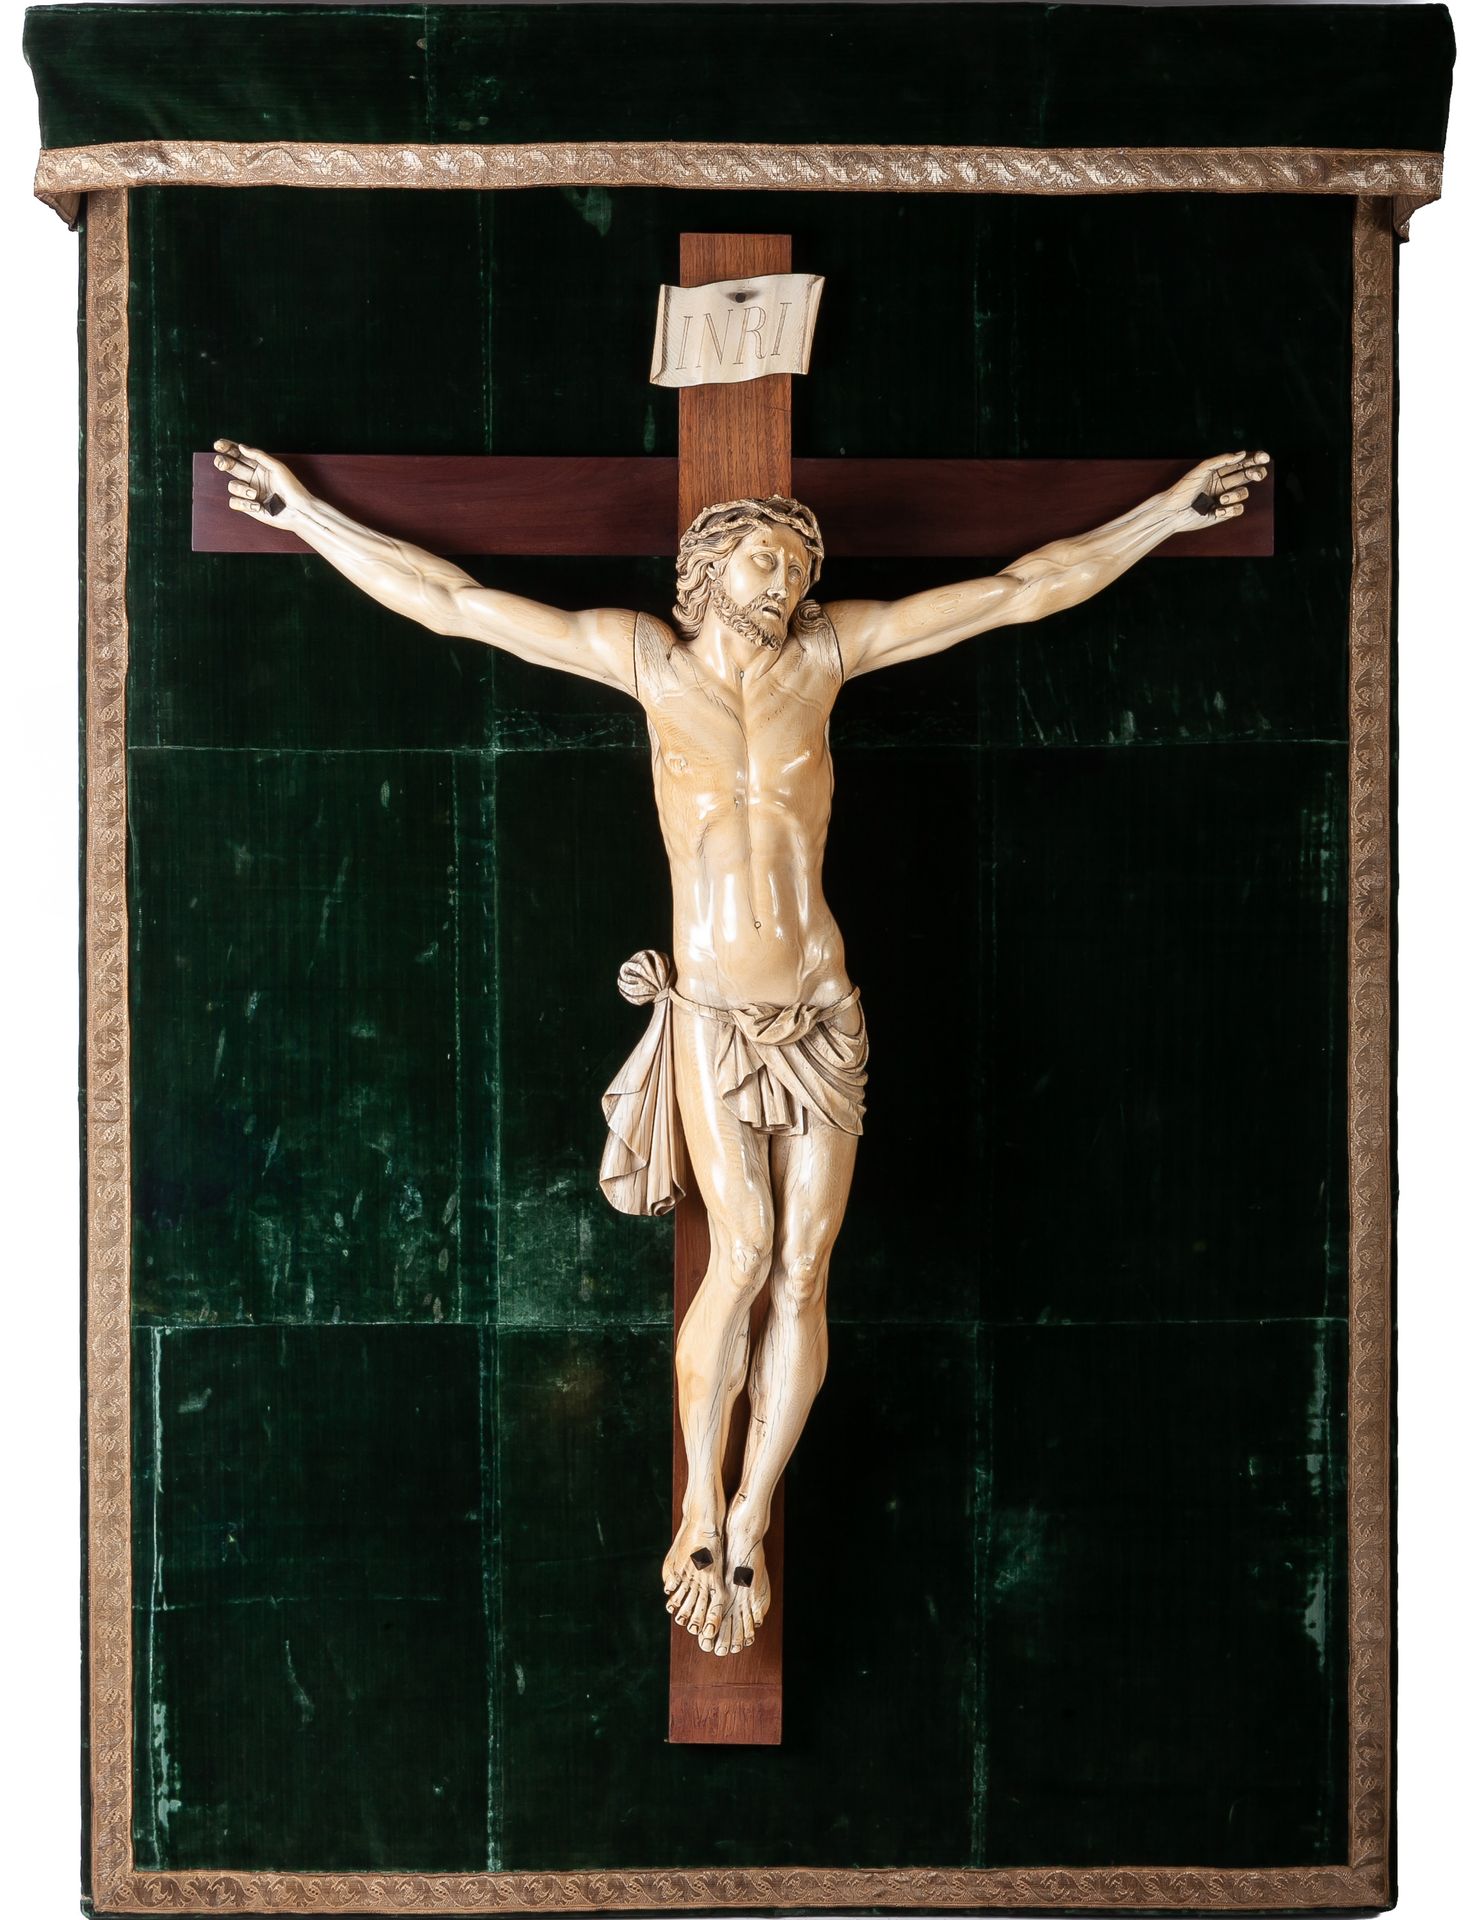 Null 
19世纪末的象牙基督像





75厘米